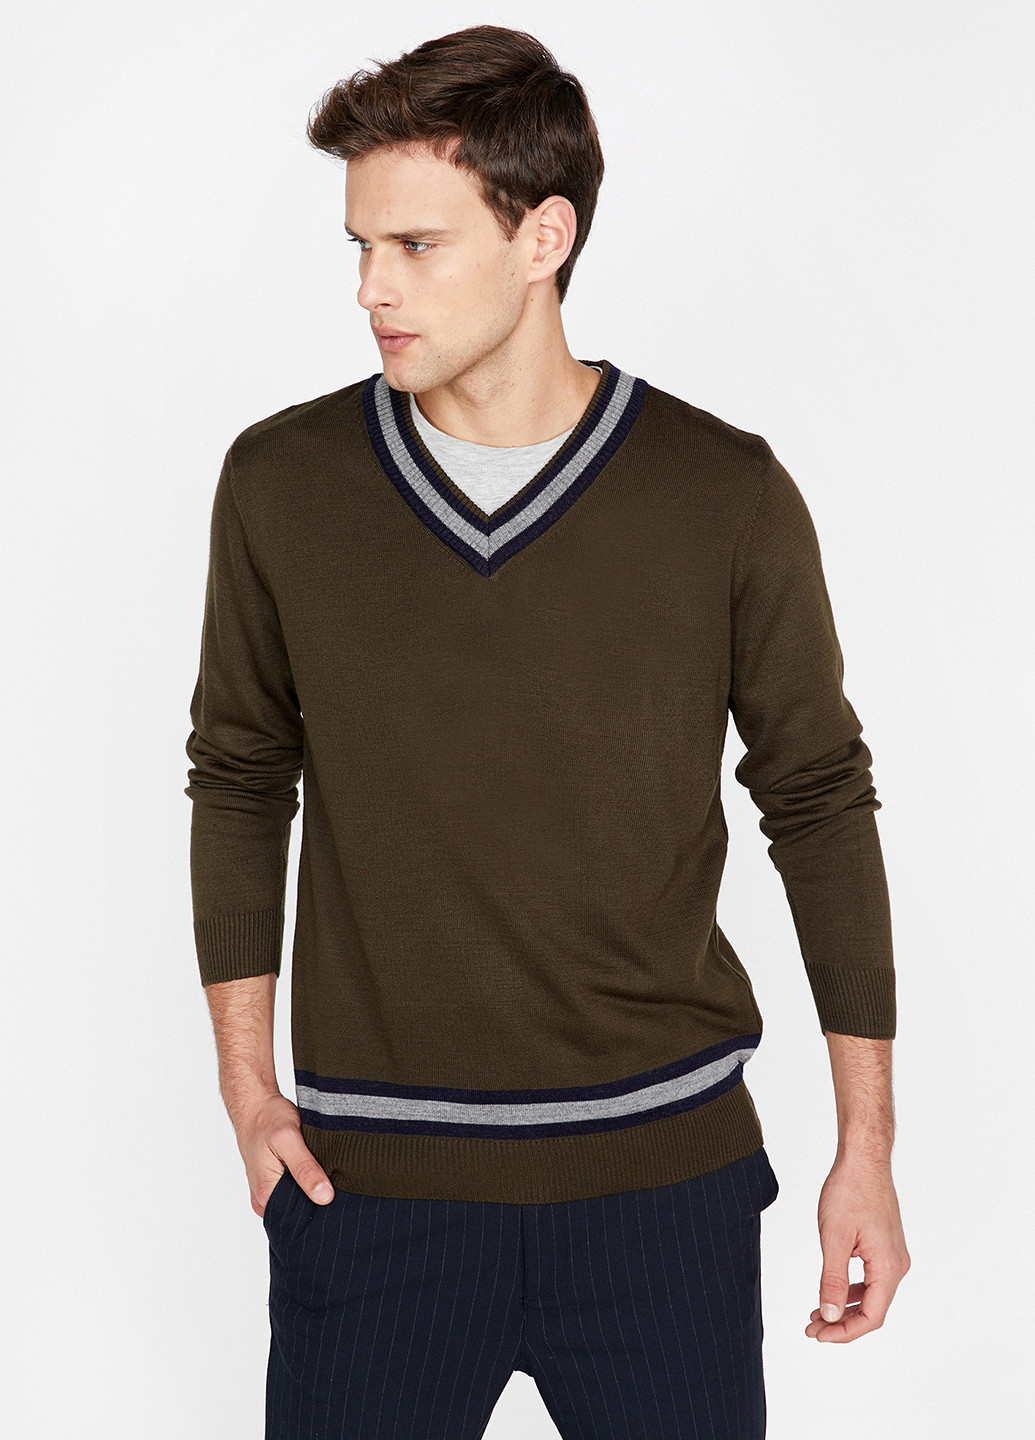 Оливковый (хаки) зимний пуловер пуловер KOTON